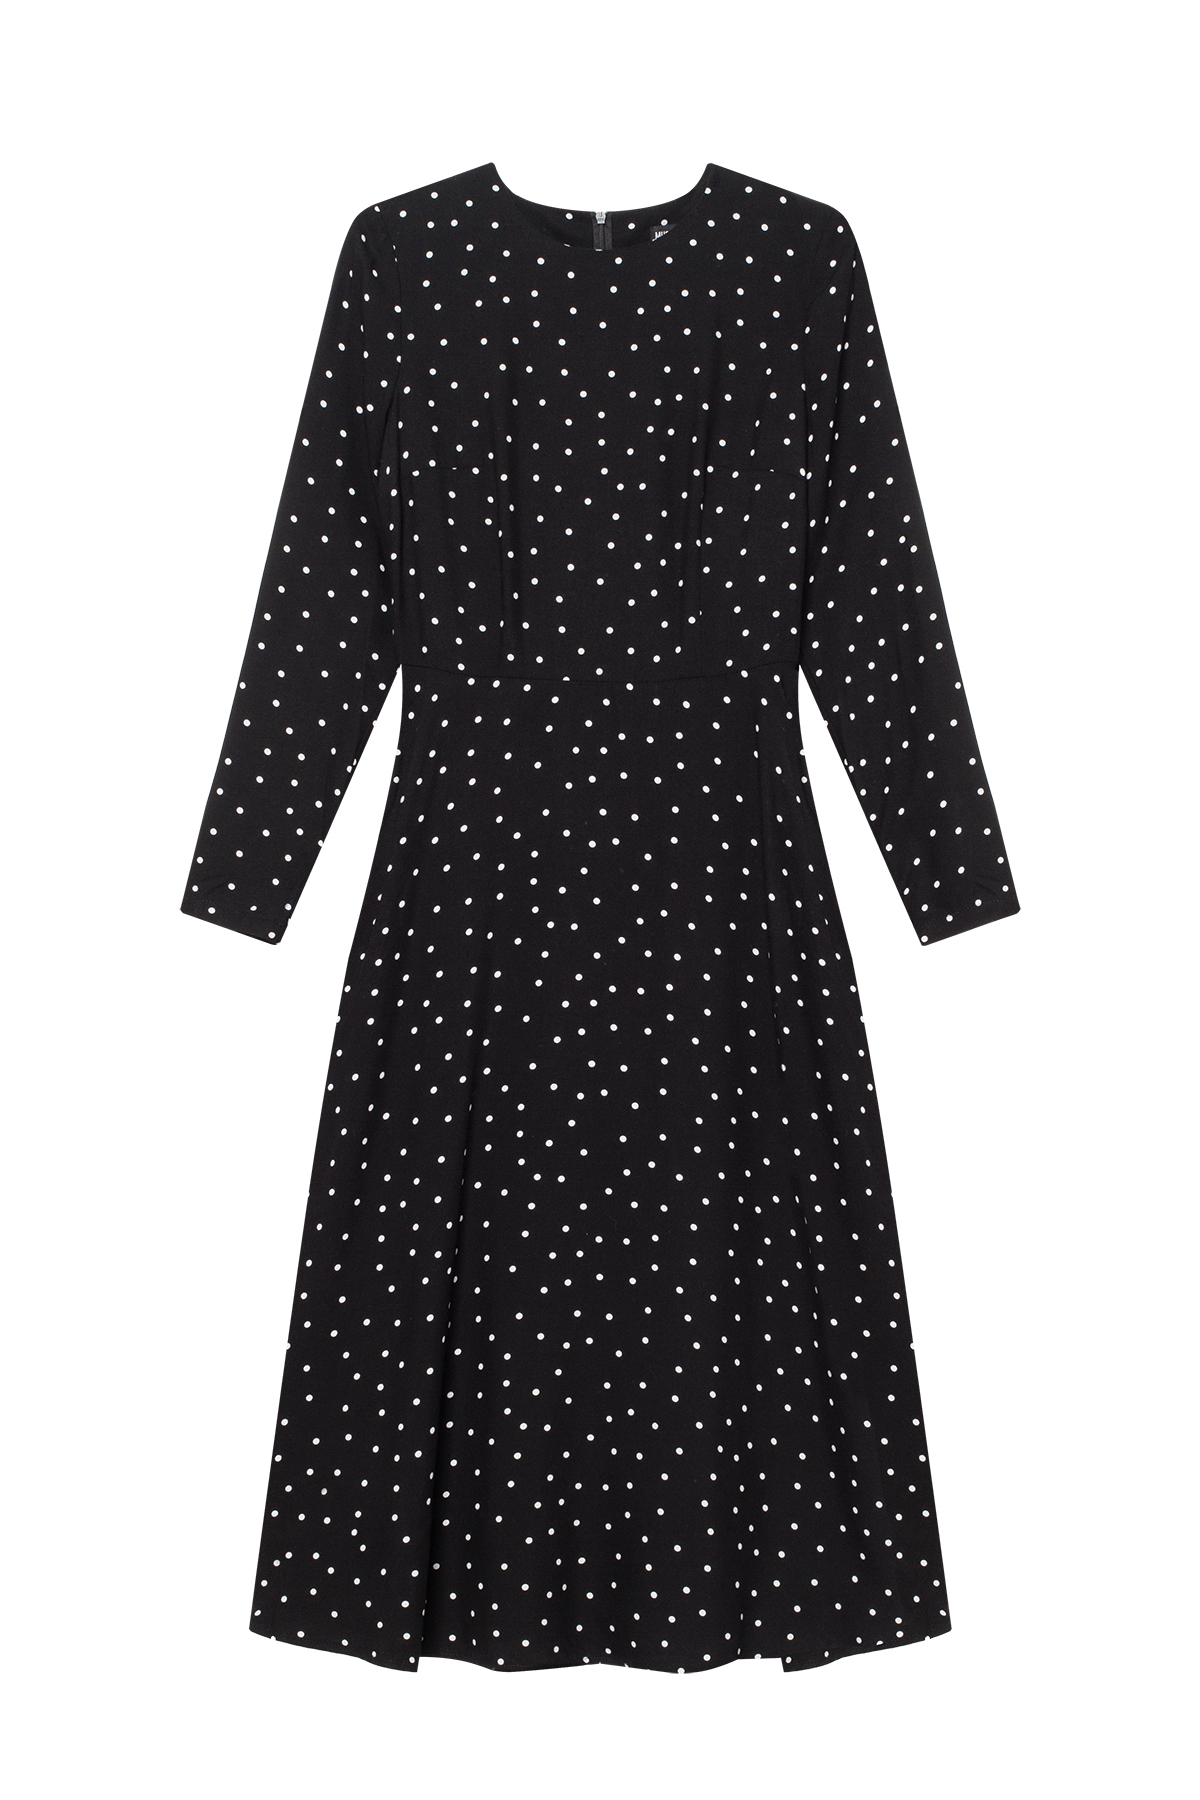 Loose viscose midi dress with white polka dots, photo 6